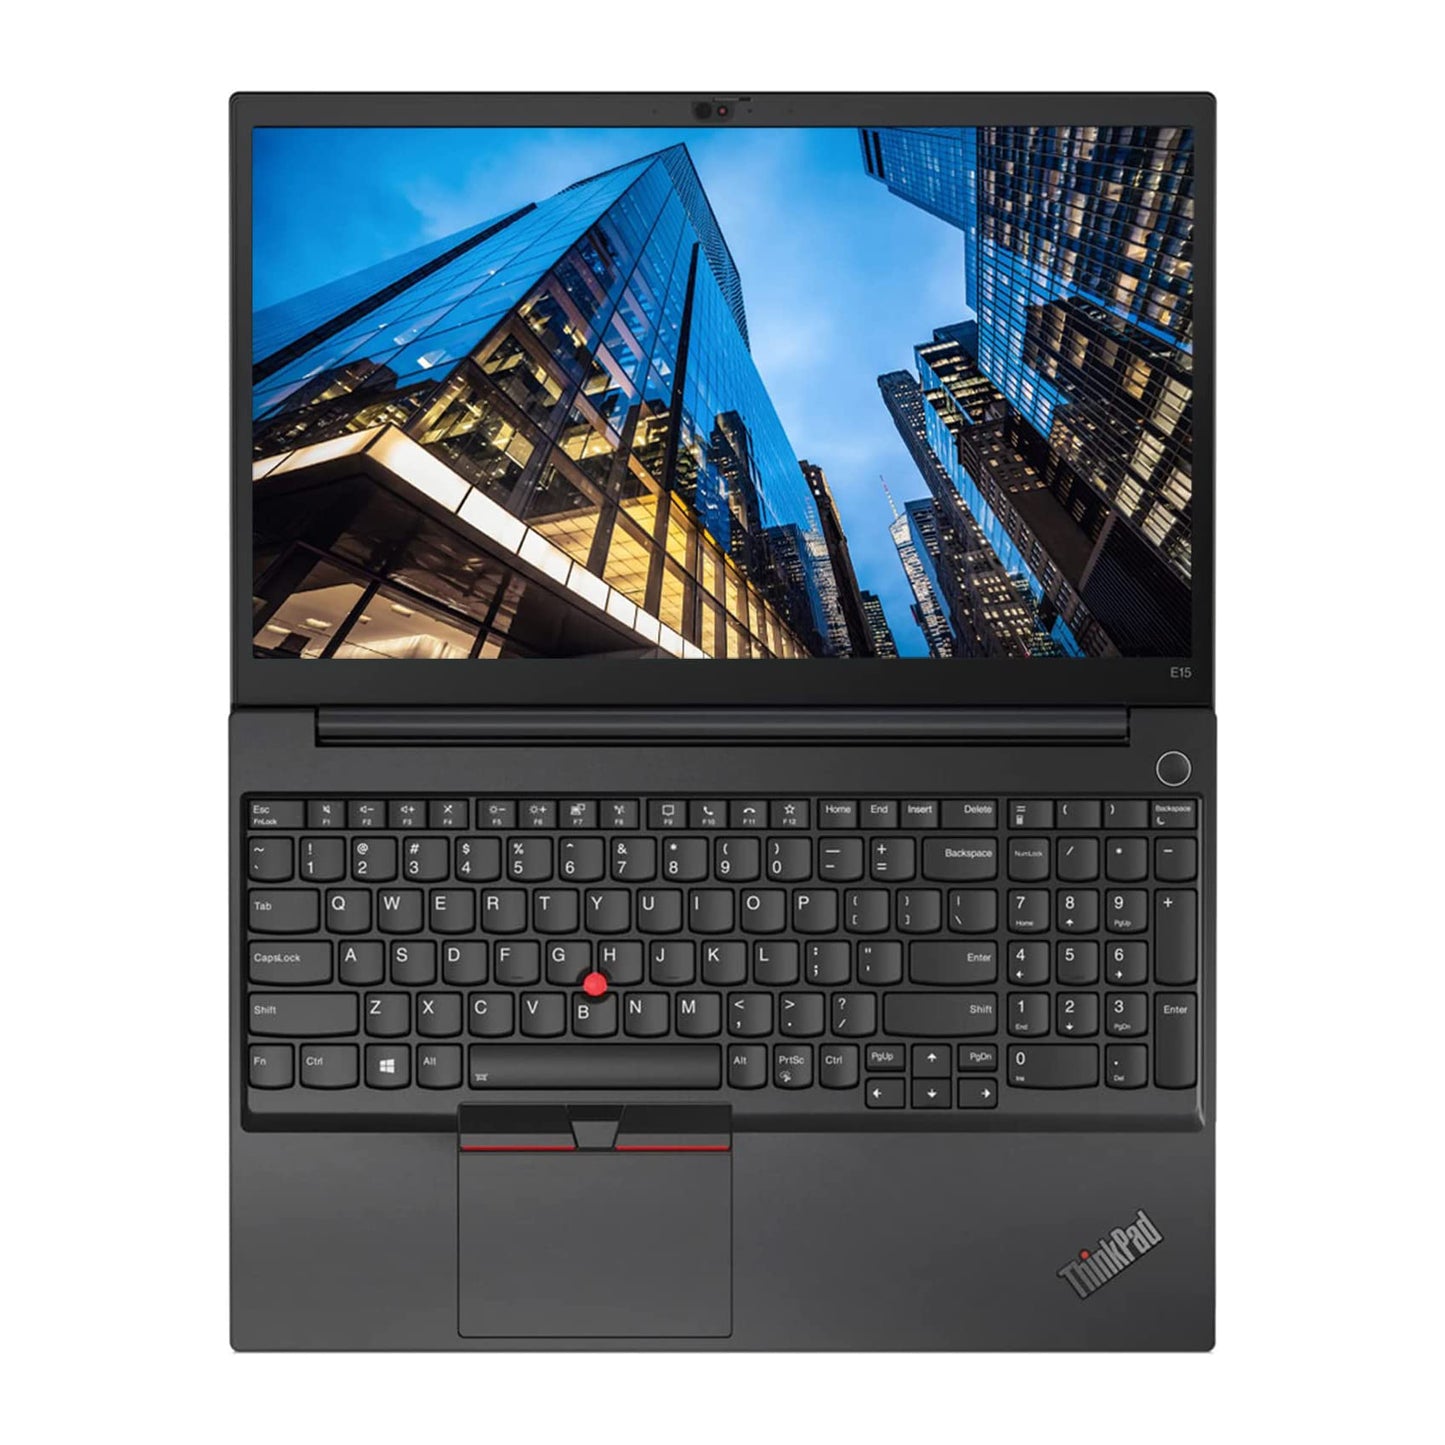 Lenovo ThinkPad E15 20TDS00B00 Core i5-1135g7 Iris Xe Graphics Laptop Offers (New OB)